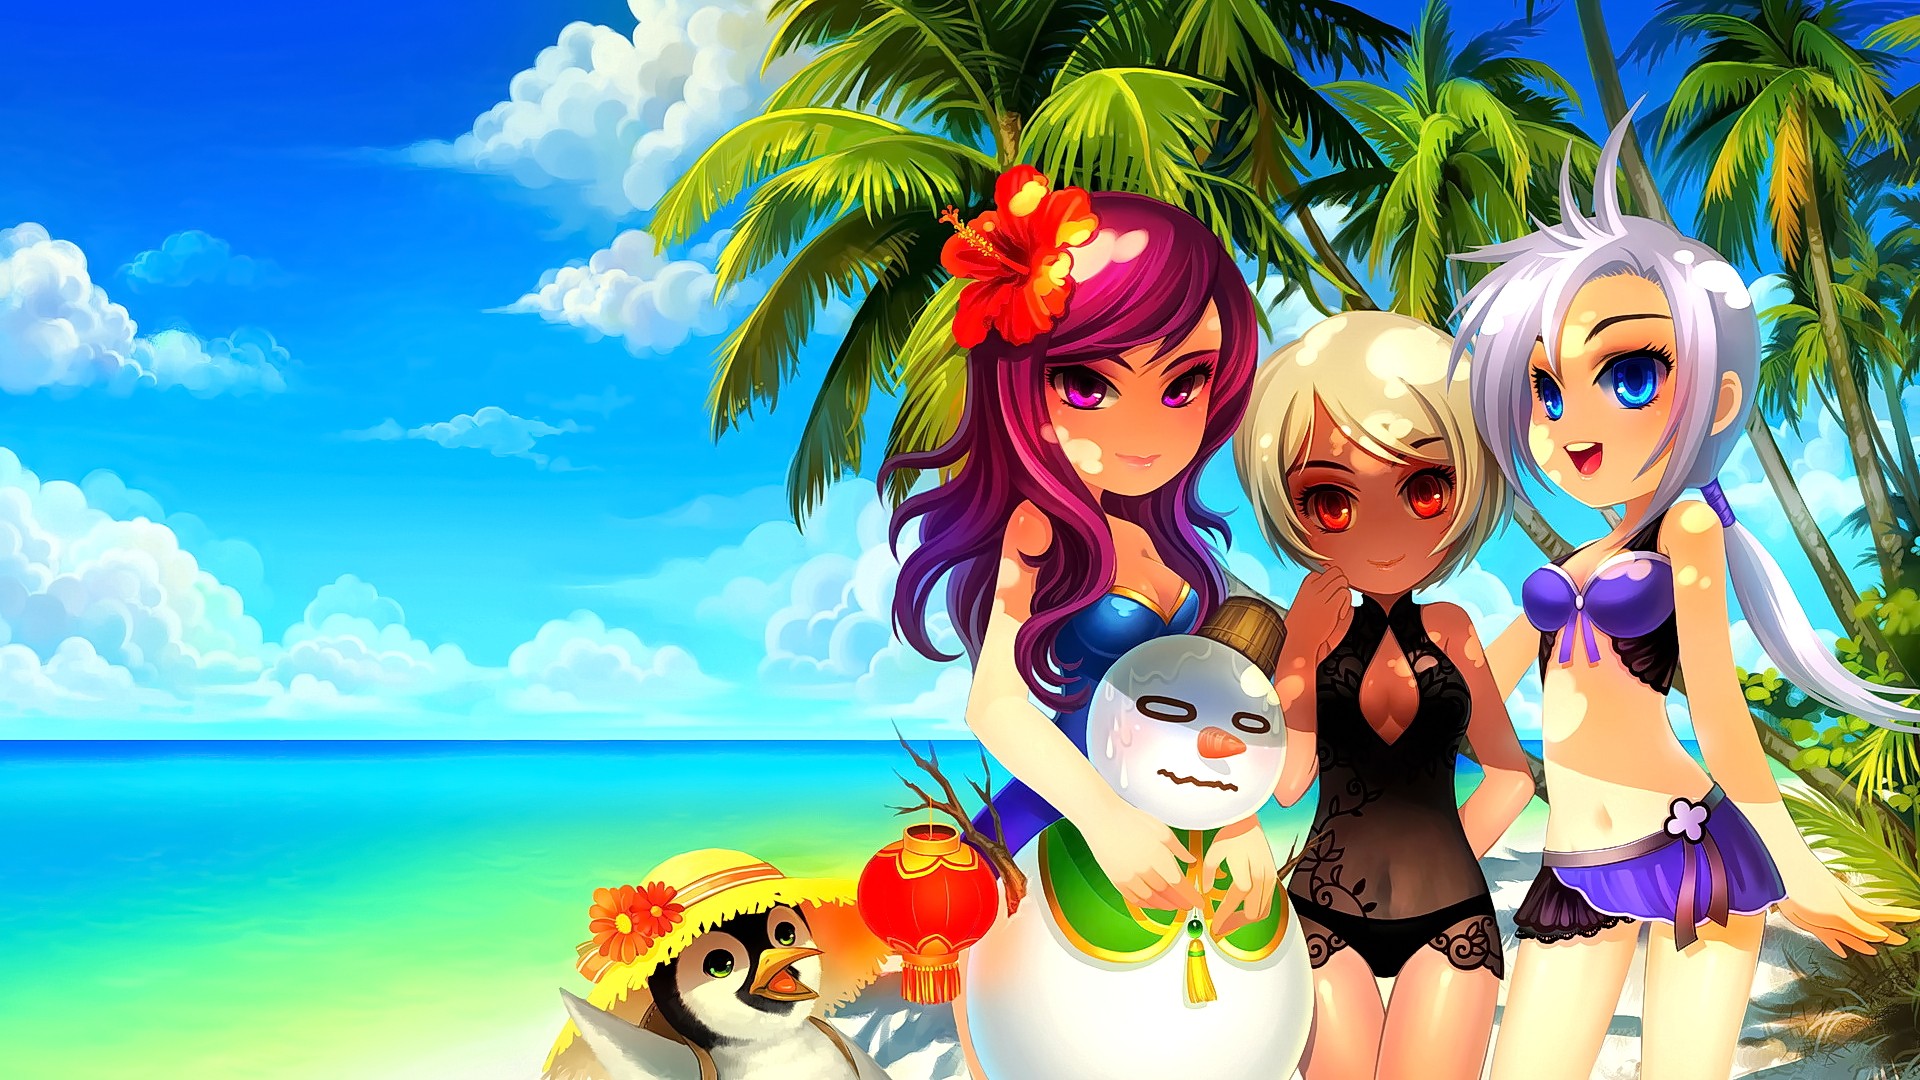 Anime 1920x1080 anime anime girls blonde short hair long hair beach bikini red eyes palm trees hibiscus straw hat swimwear